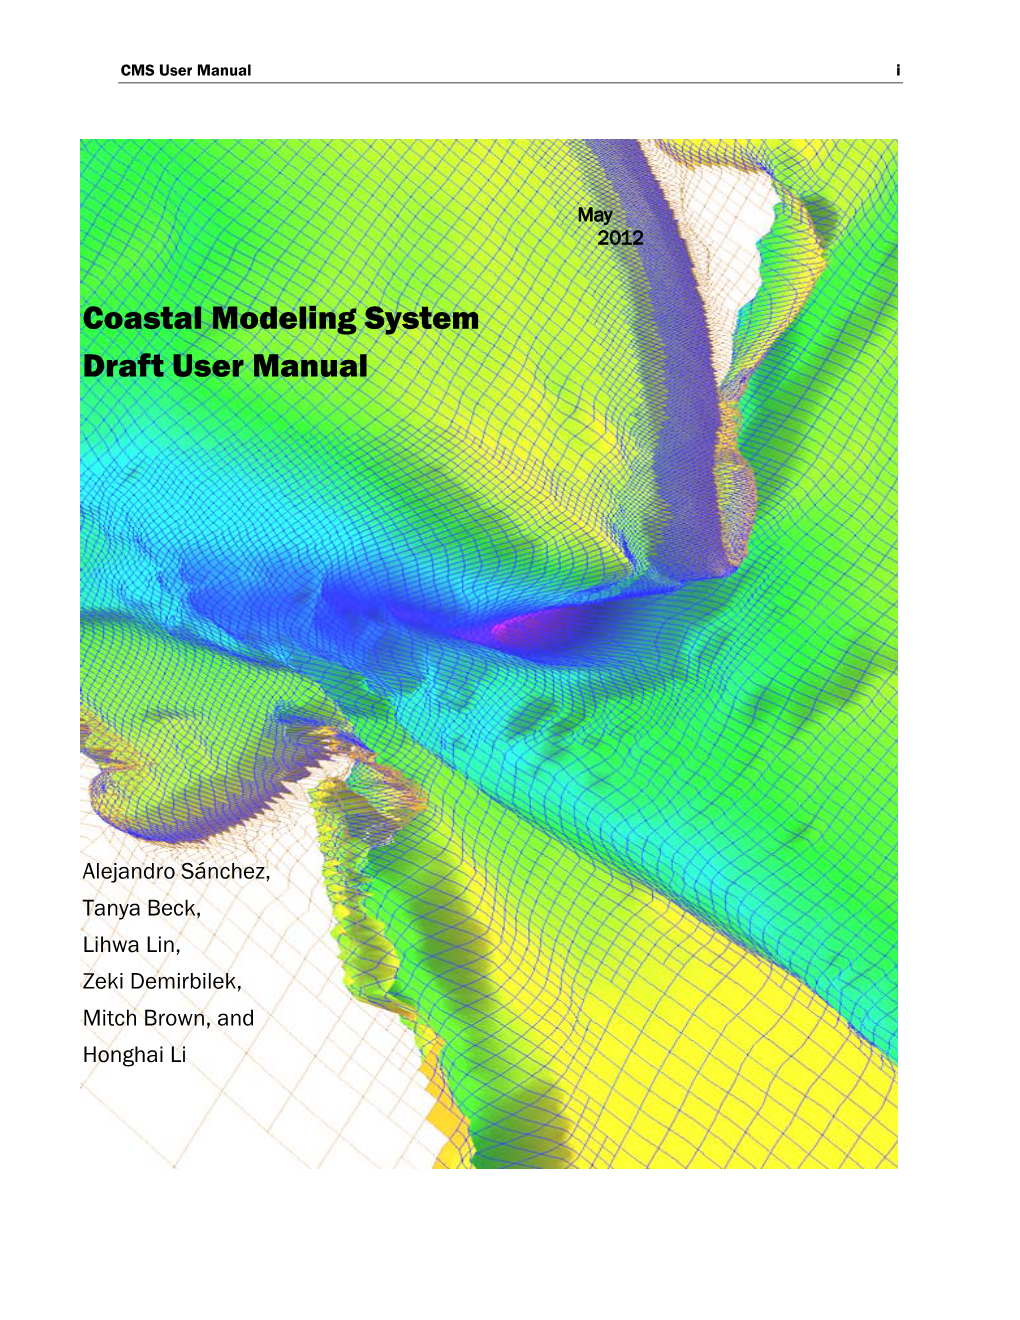 Coastal Modeling System Draft User Manual